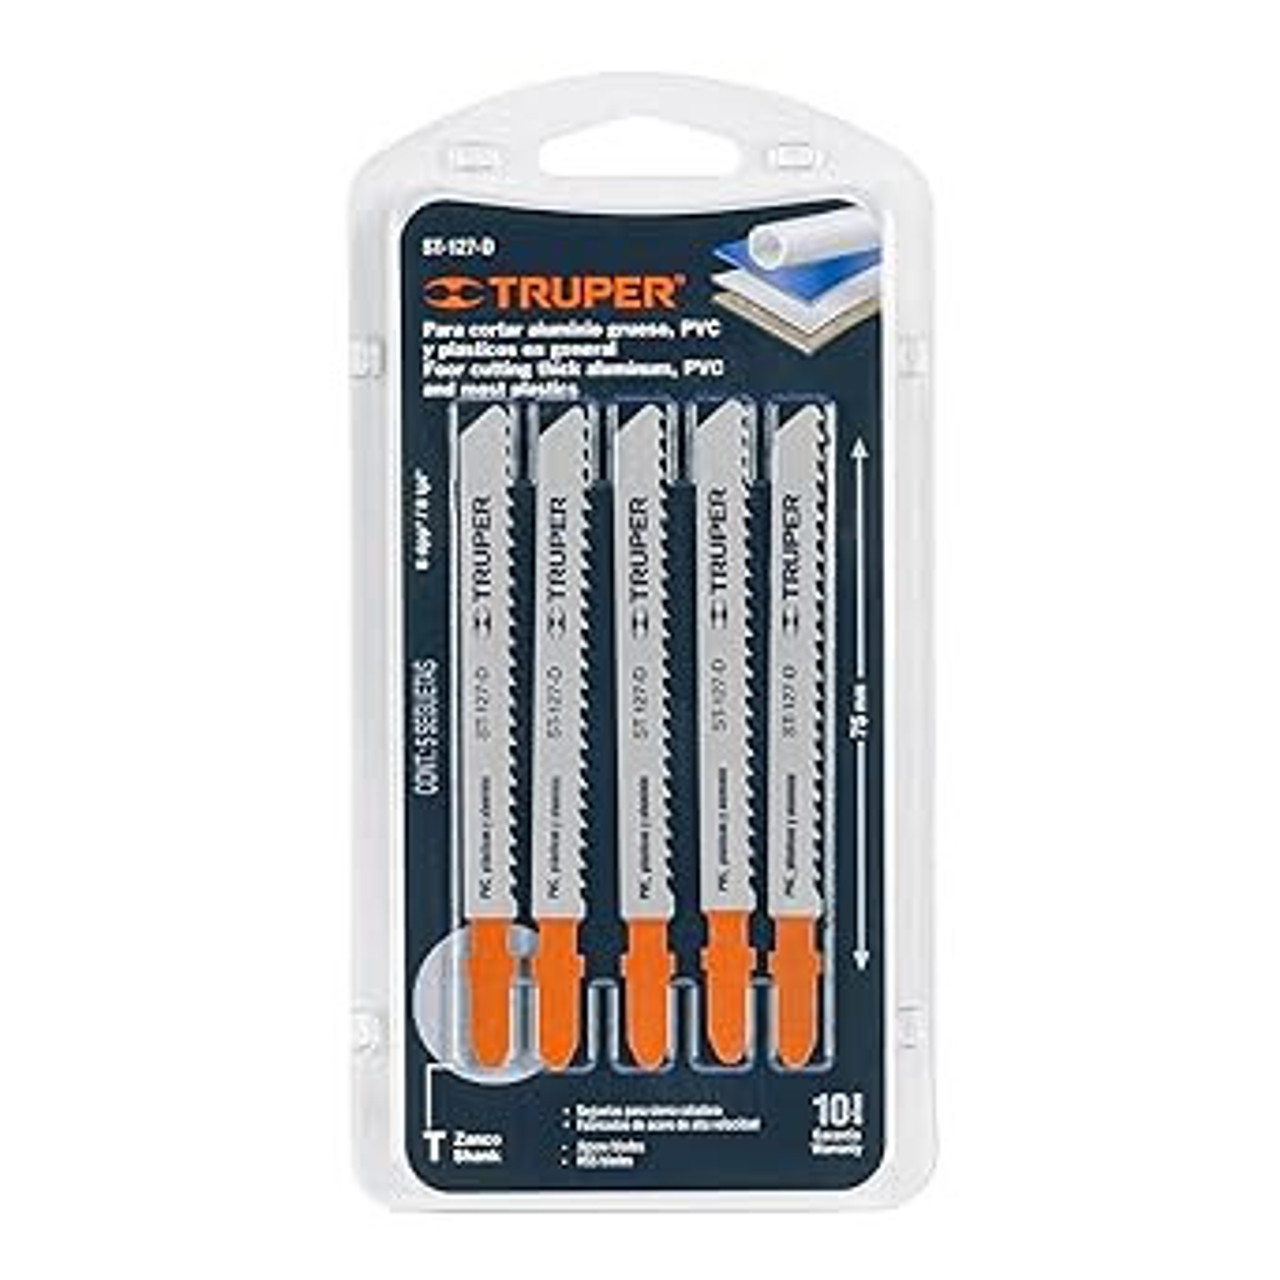 Truper T-Shank Straight Cut Jig Saw Blades for Metal,Plastic and Aluminum Cuttin